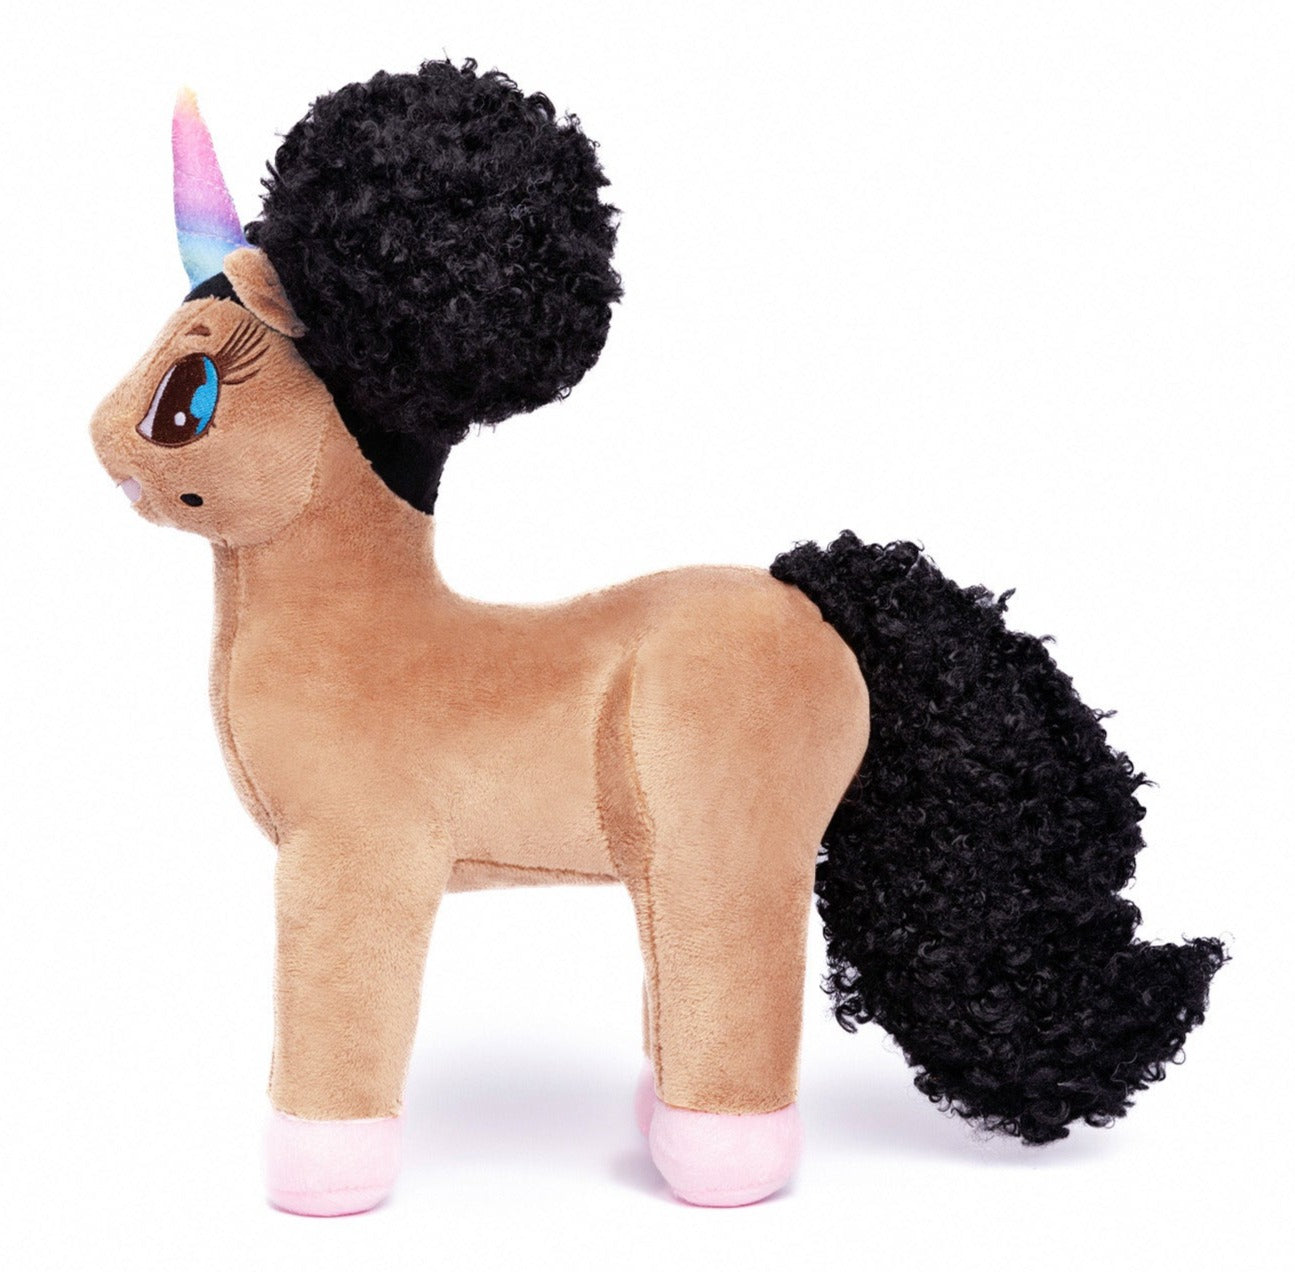 Mia Black Unicorn Plush Toy - 12 inch